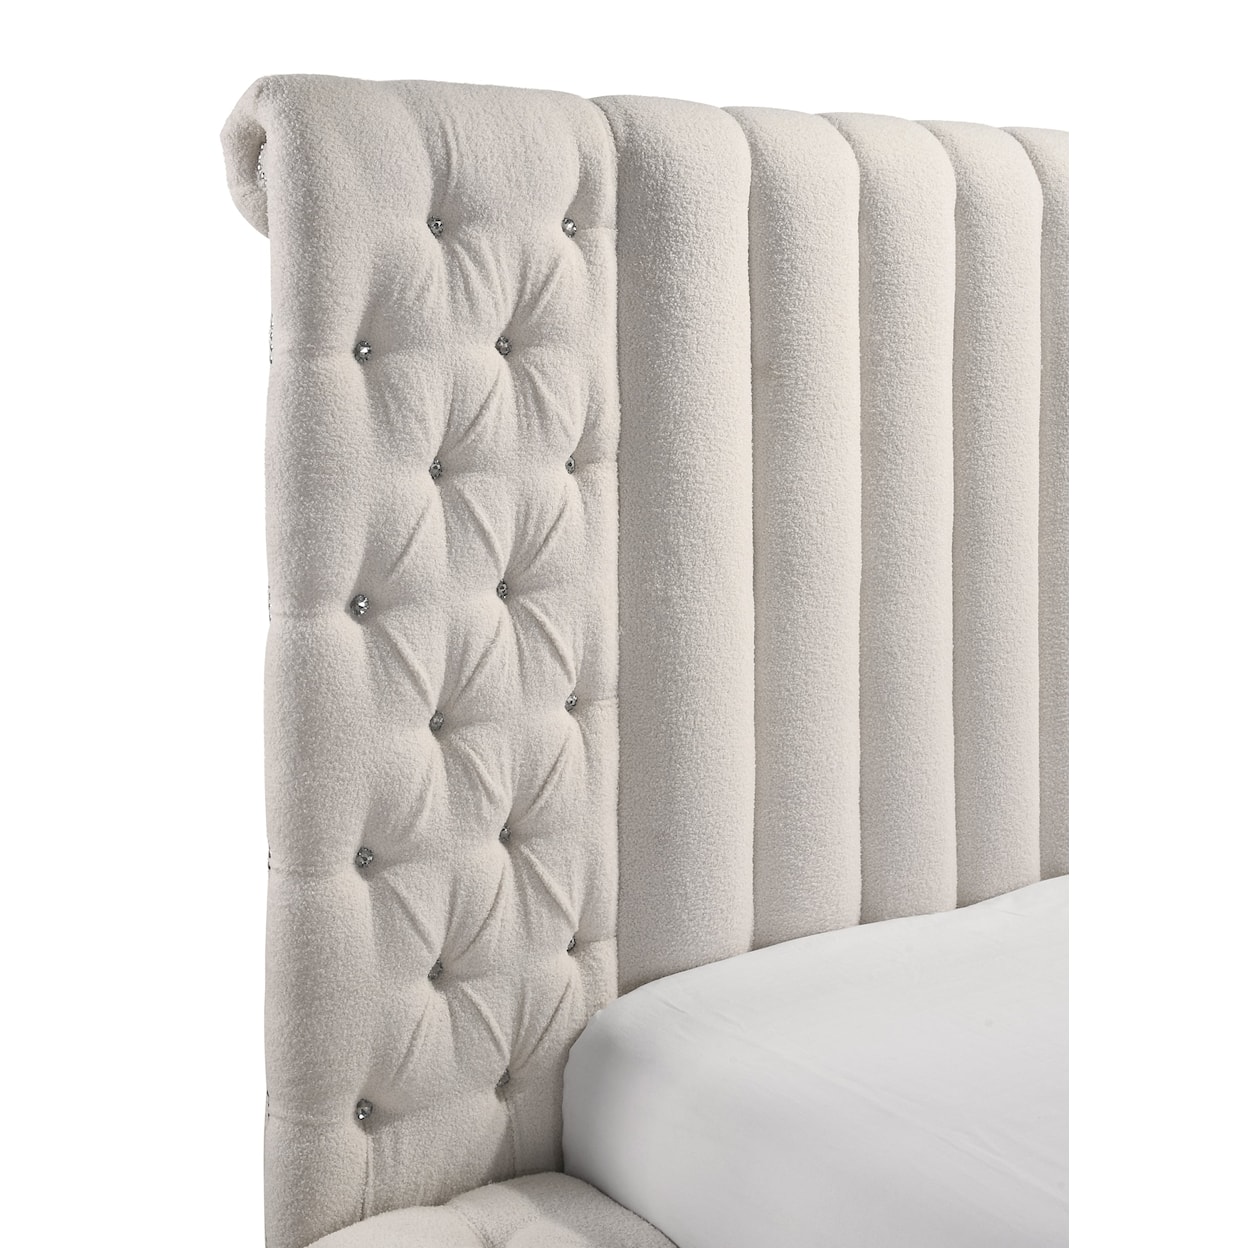 Crown Mark DANBURY Upholstered Storage Bed - Queen